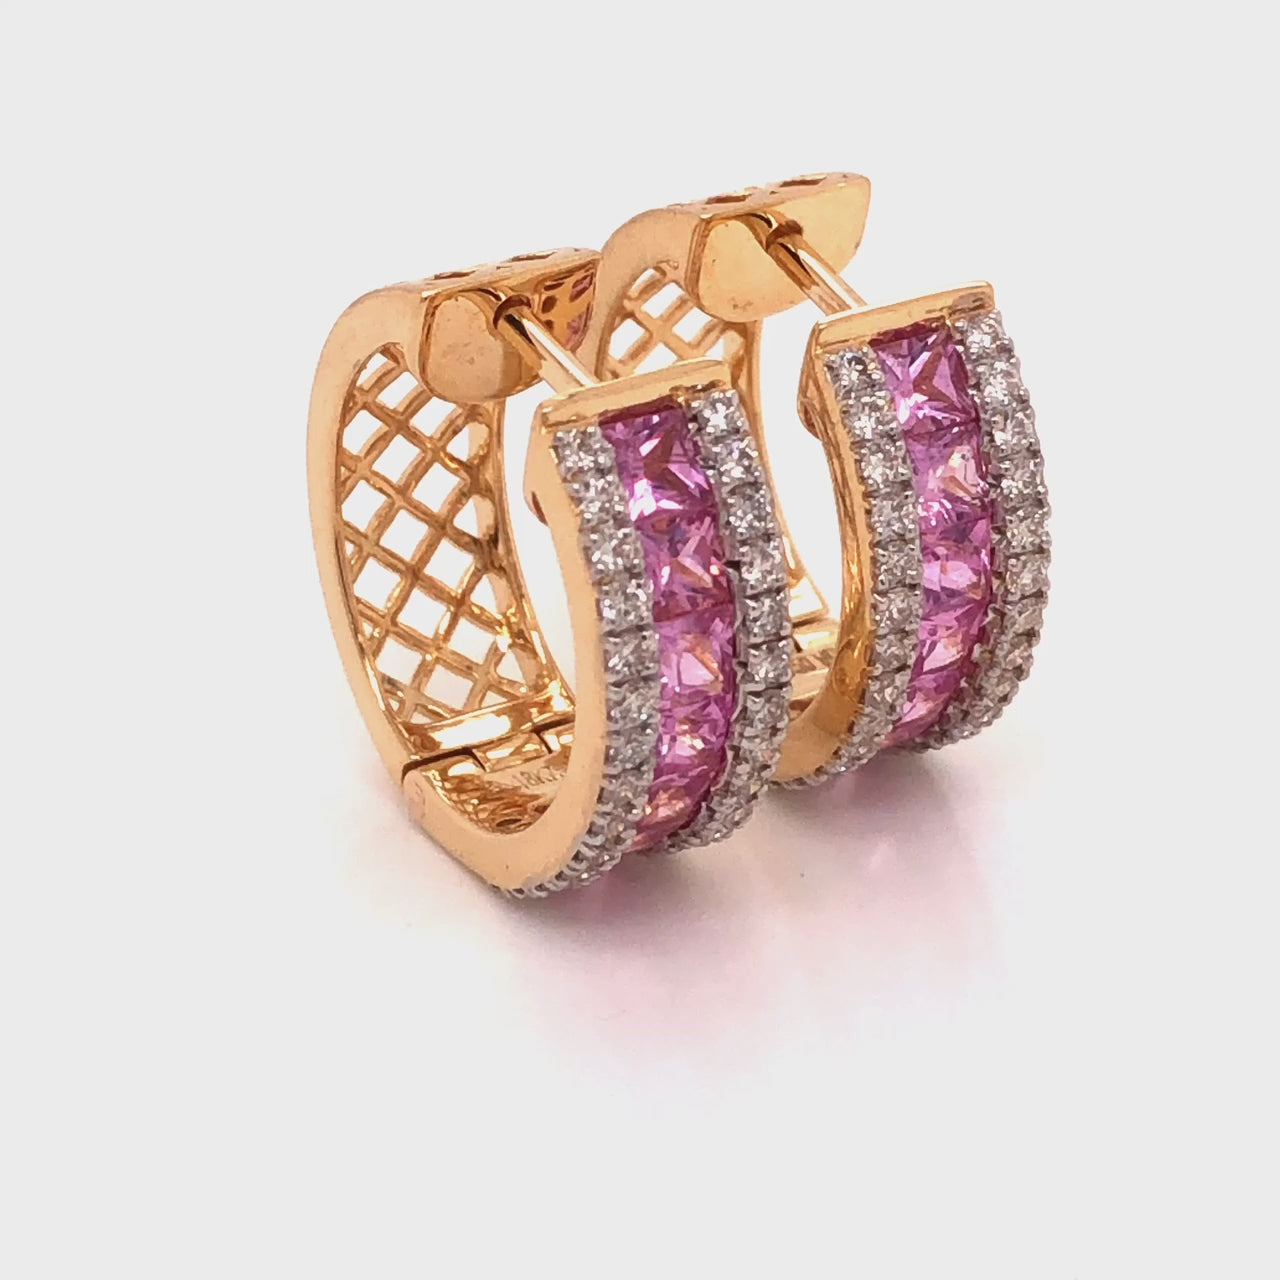 Pink sapphire diamond jewelry